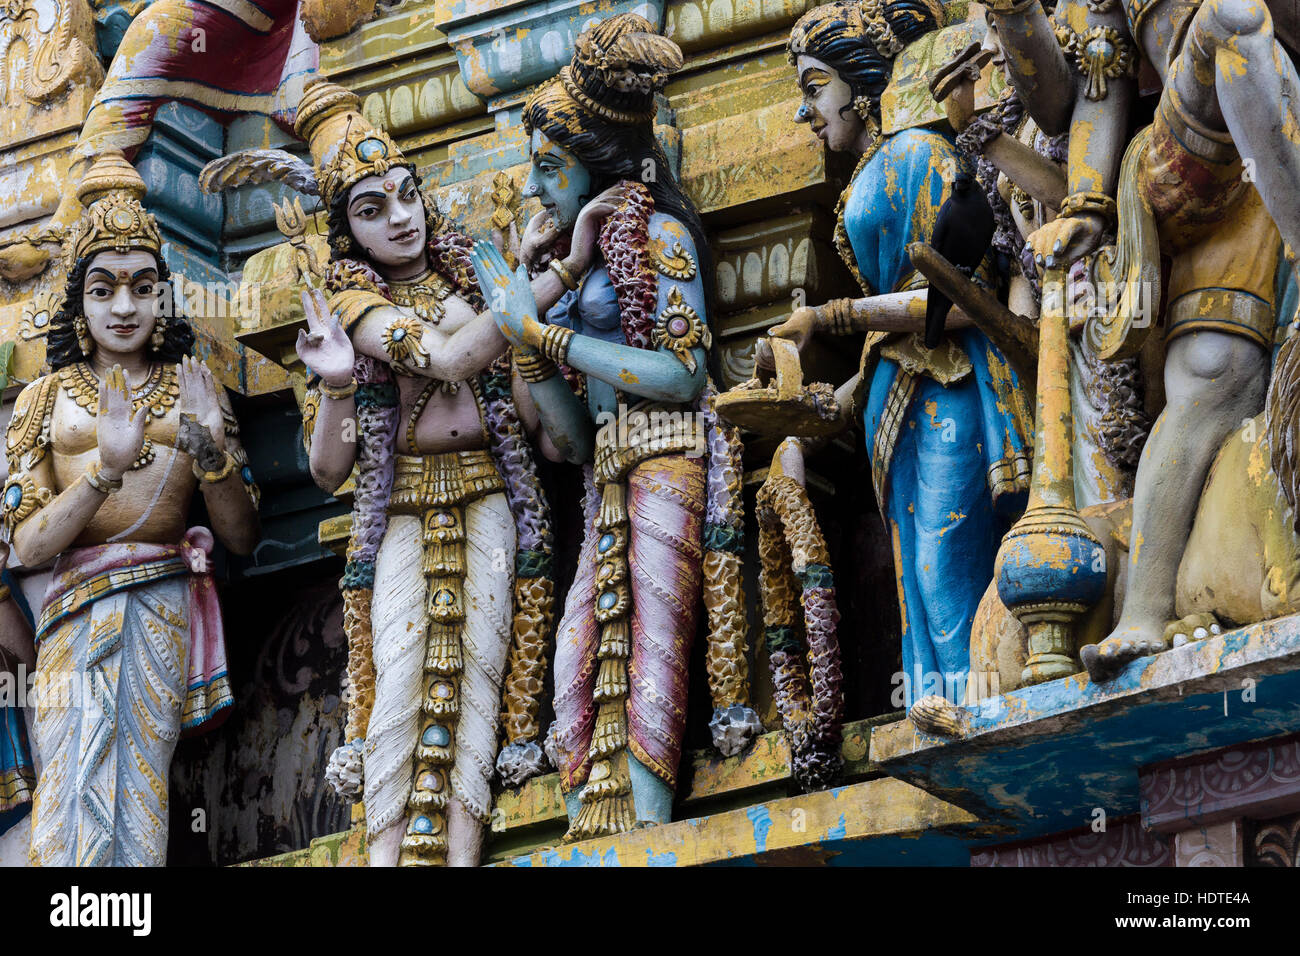 Closeup detalles sobre la torre de un templo hindú dedicado al Señor Shiva en Colombo, Sri Lanka. Foto de stock